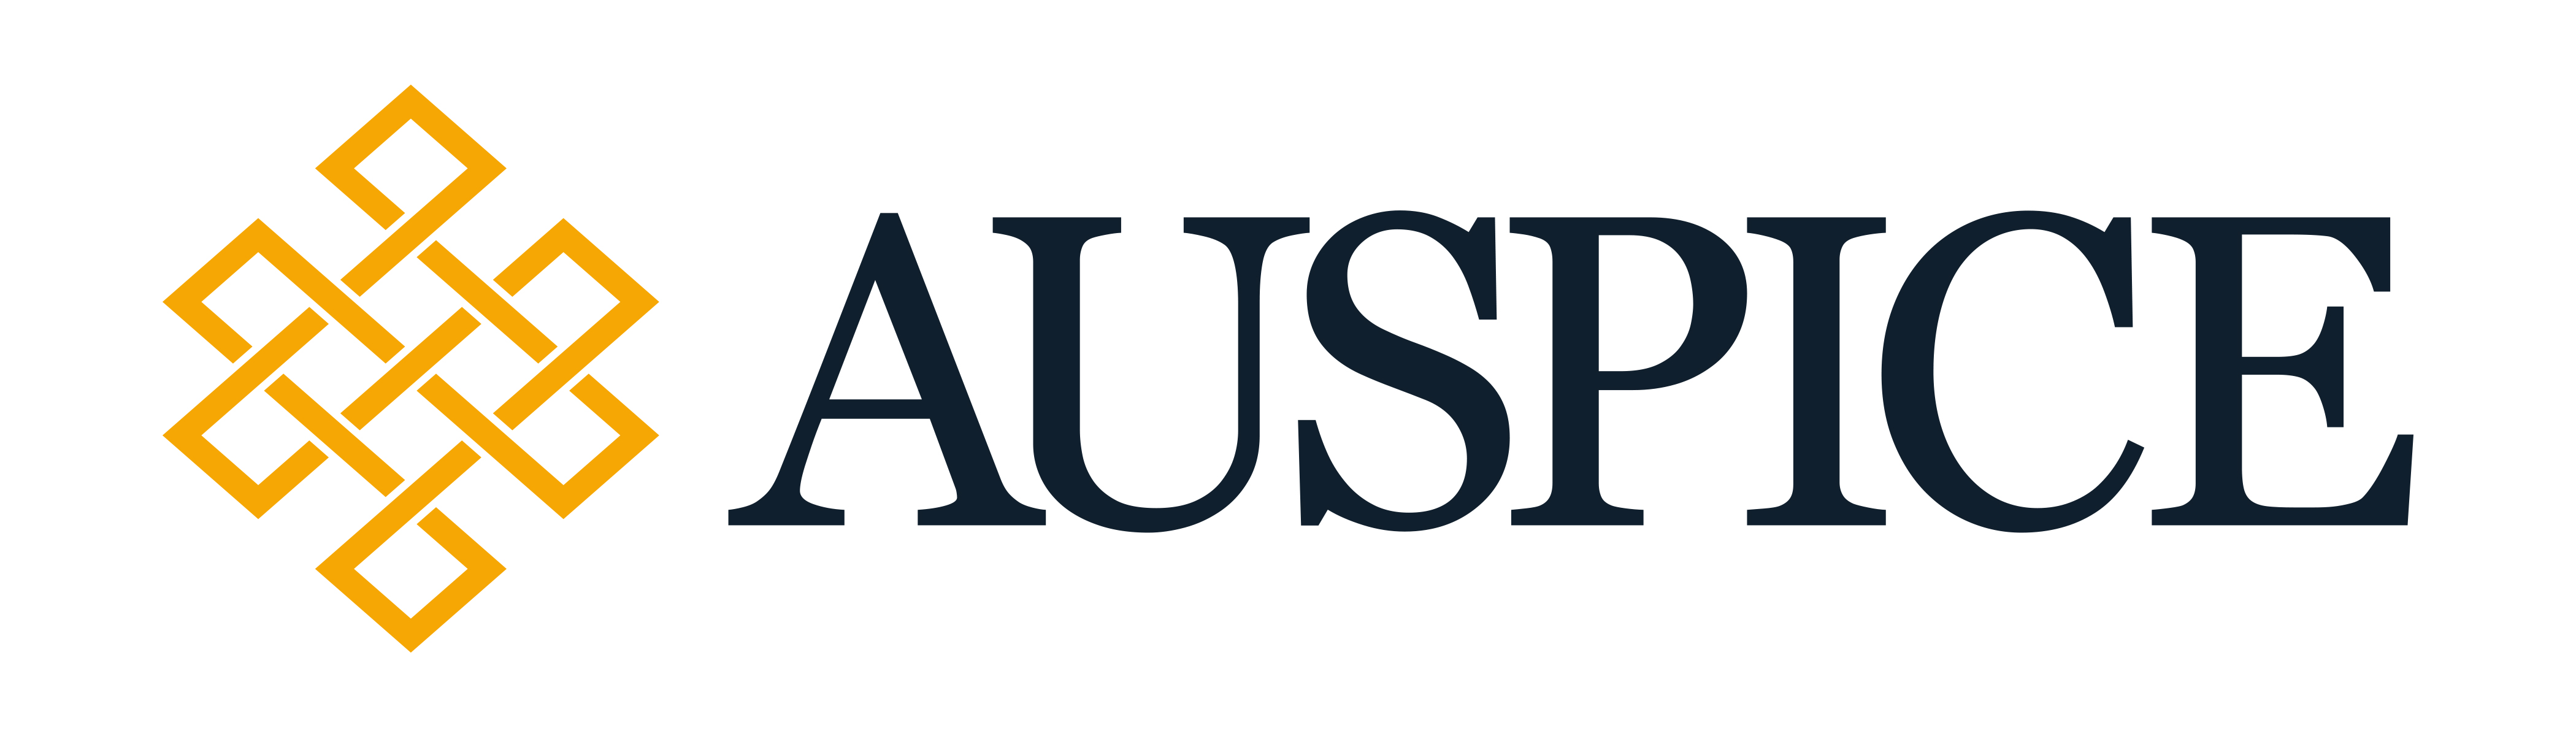 Auspice Capital Advisors Ltd.